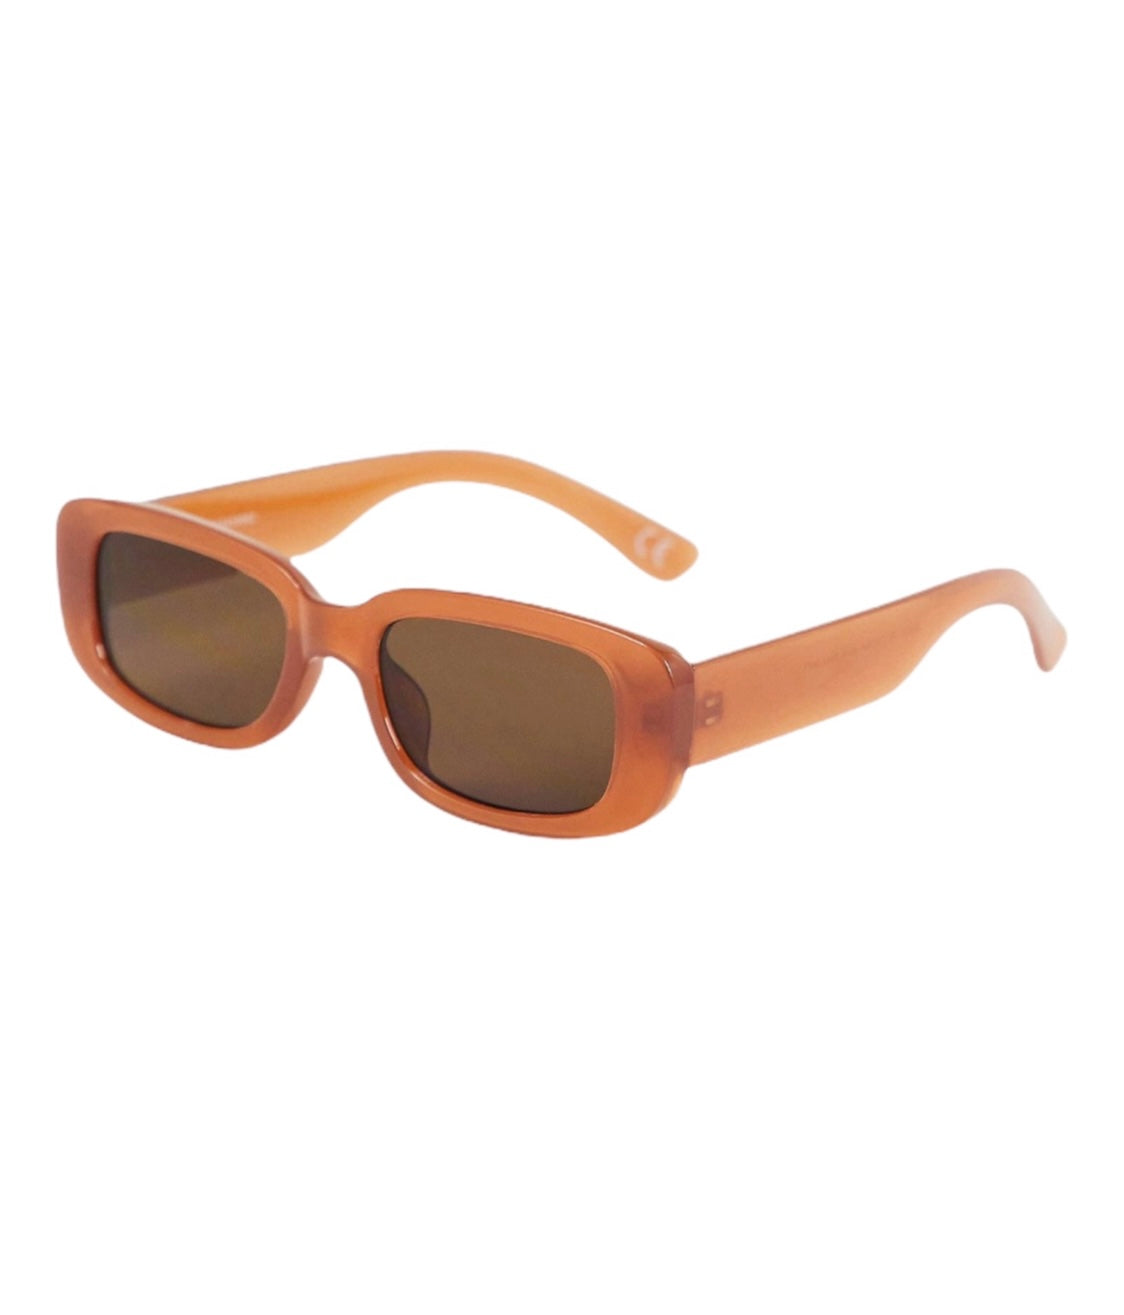 Josie Sunglasses in Jelly Orange